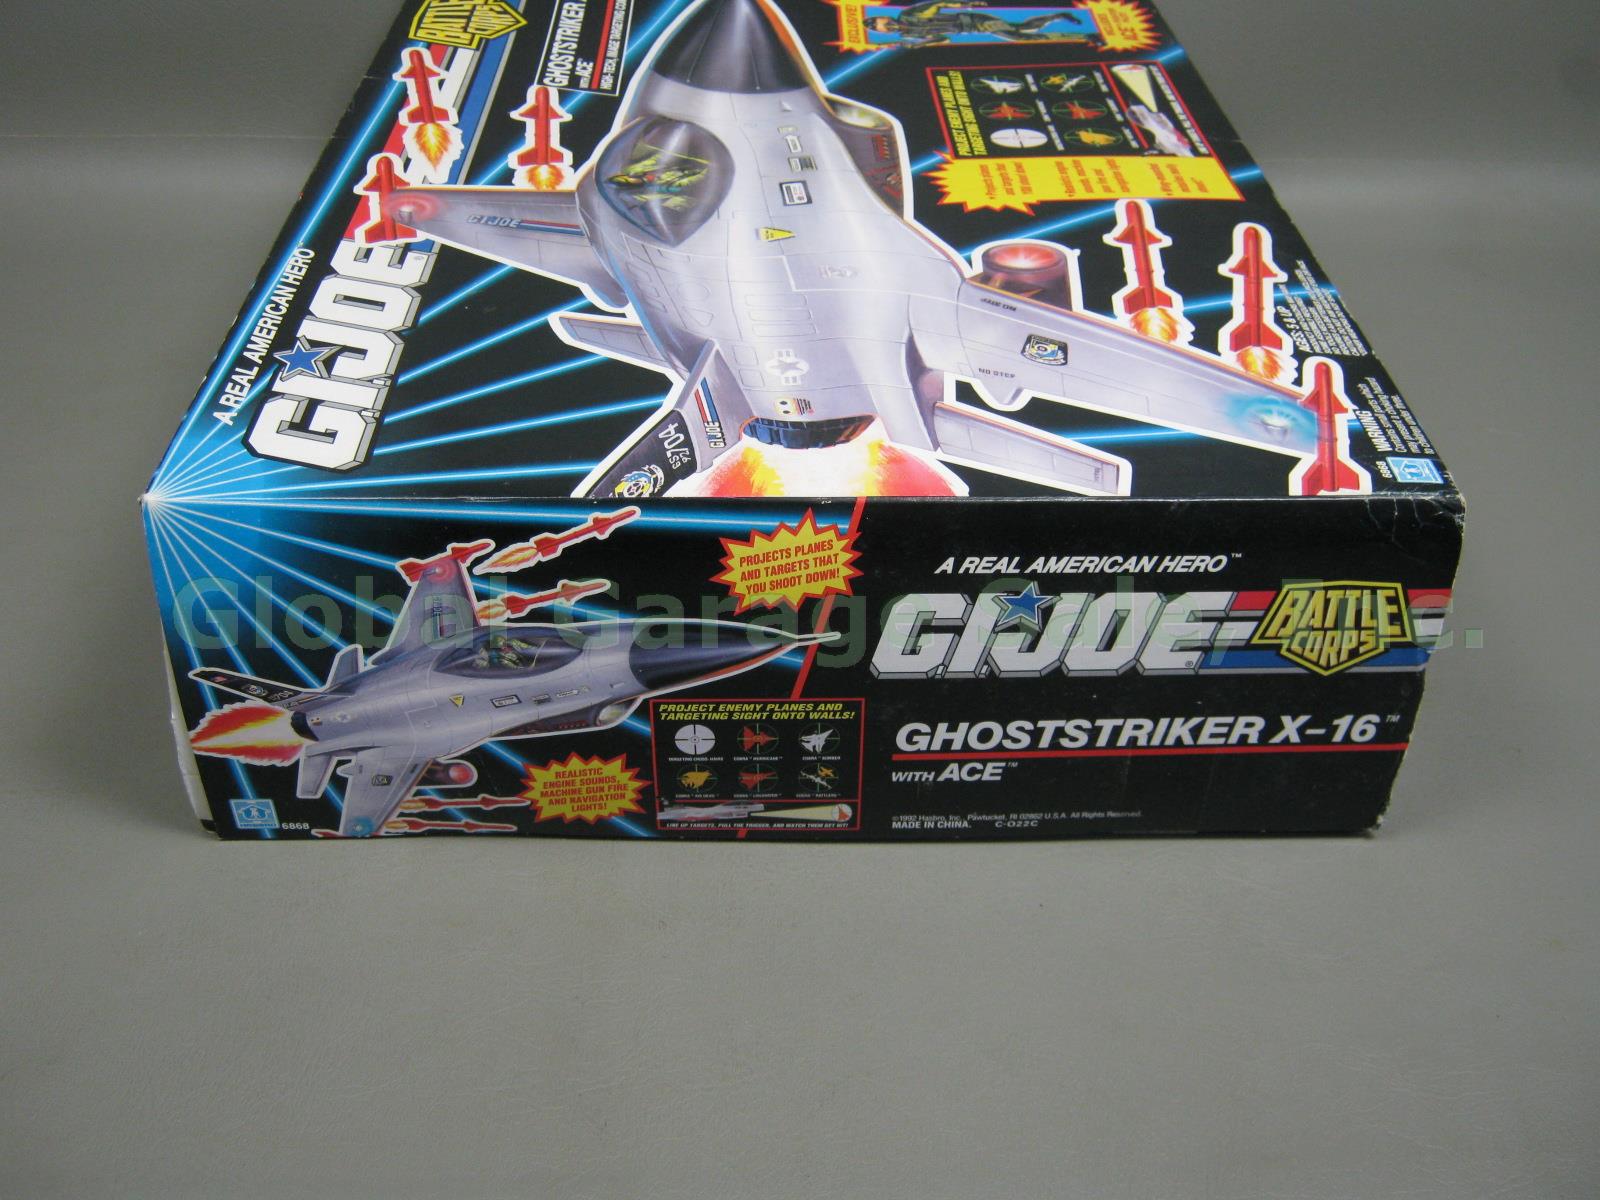 NIB 1992 GI Joe Battle Corps Ghoststriker X-16 Jet W/ Ace Fighter Pilot Figure 3